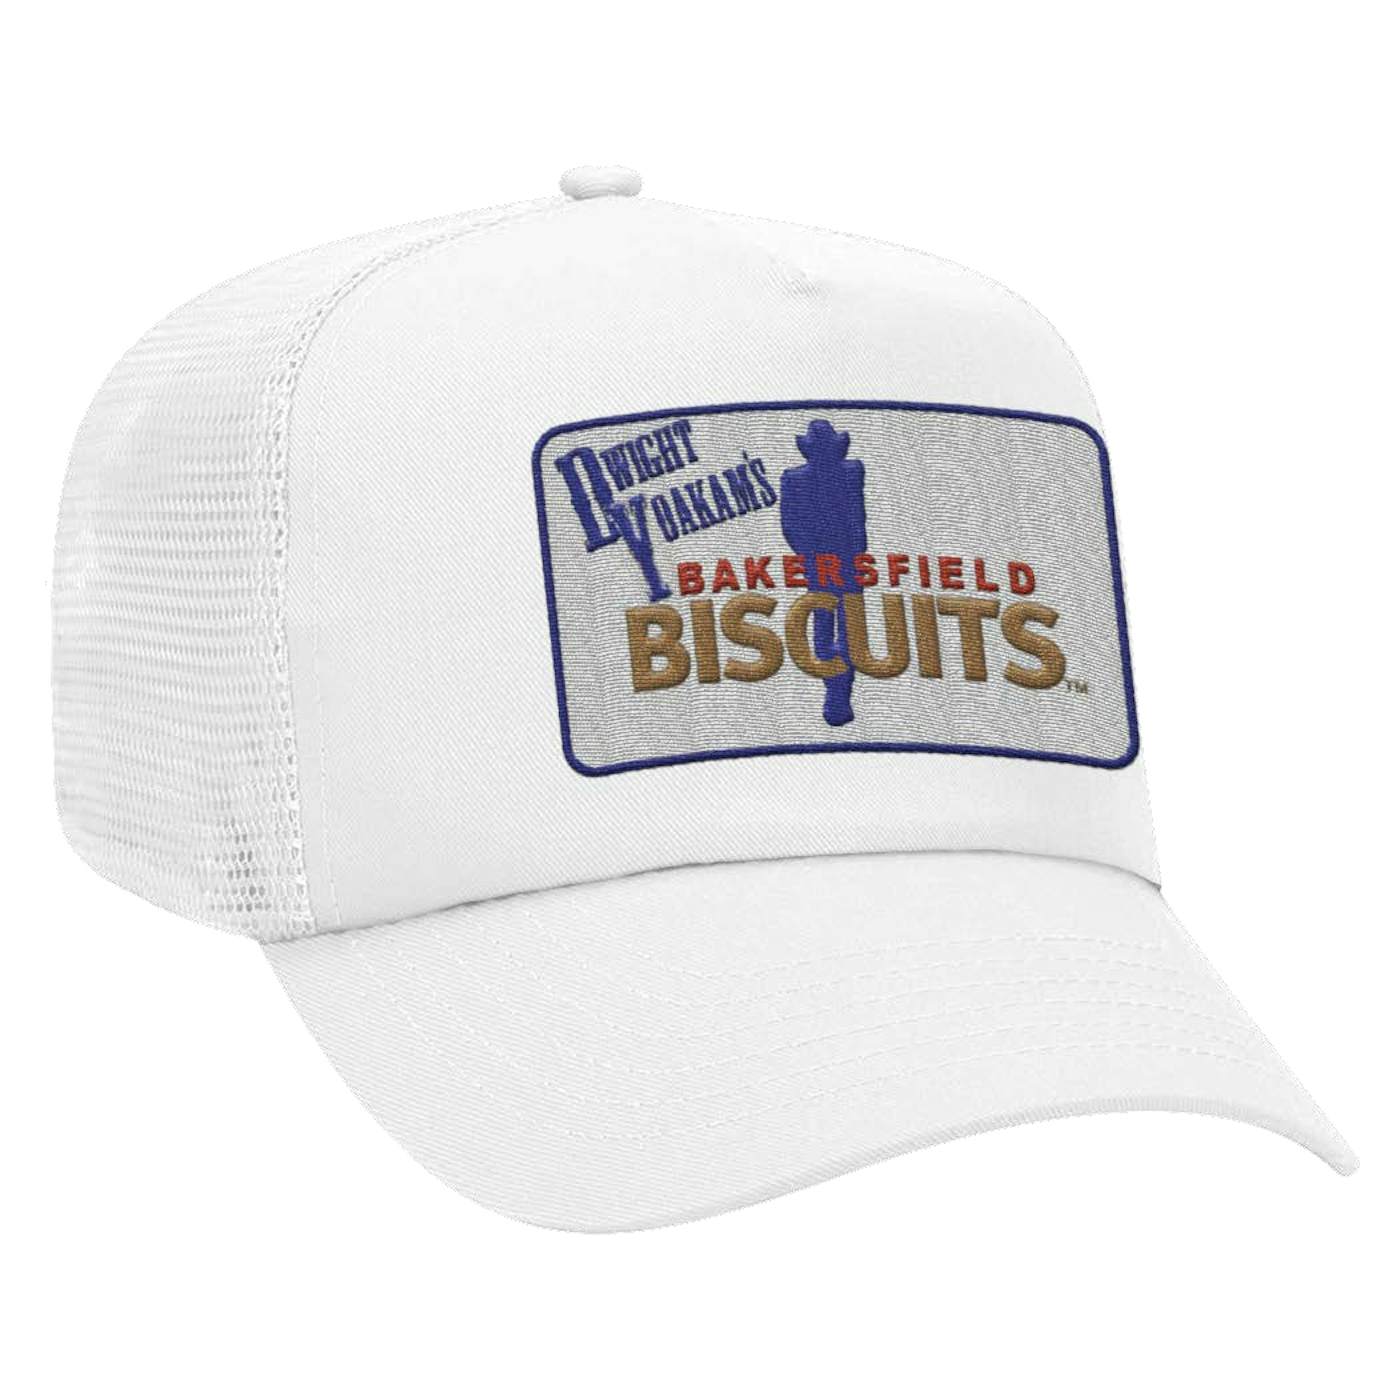 Dwight Yoakam Bakersfield Biscuits Trucker Hat White